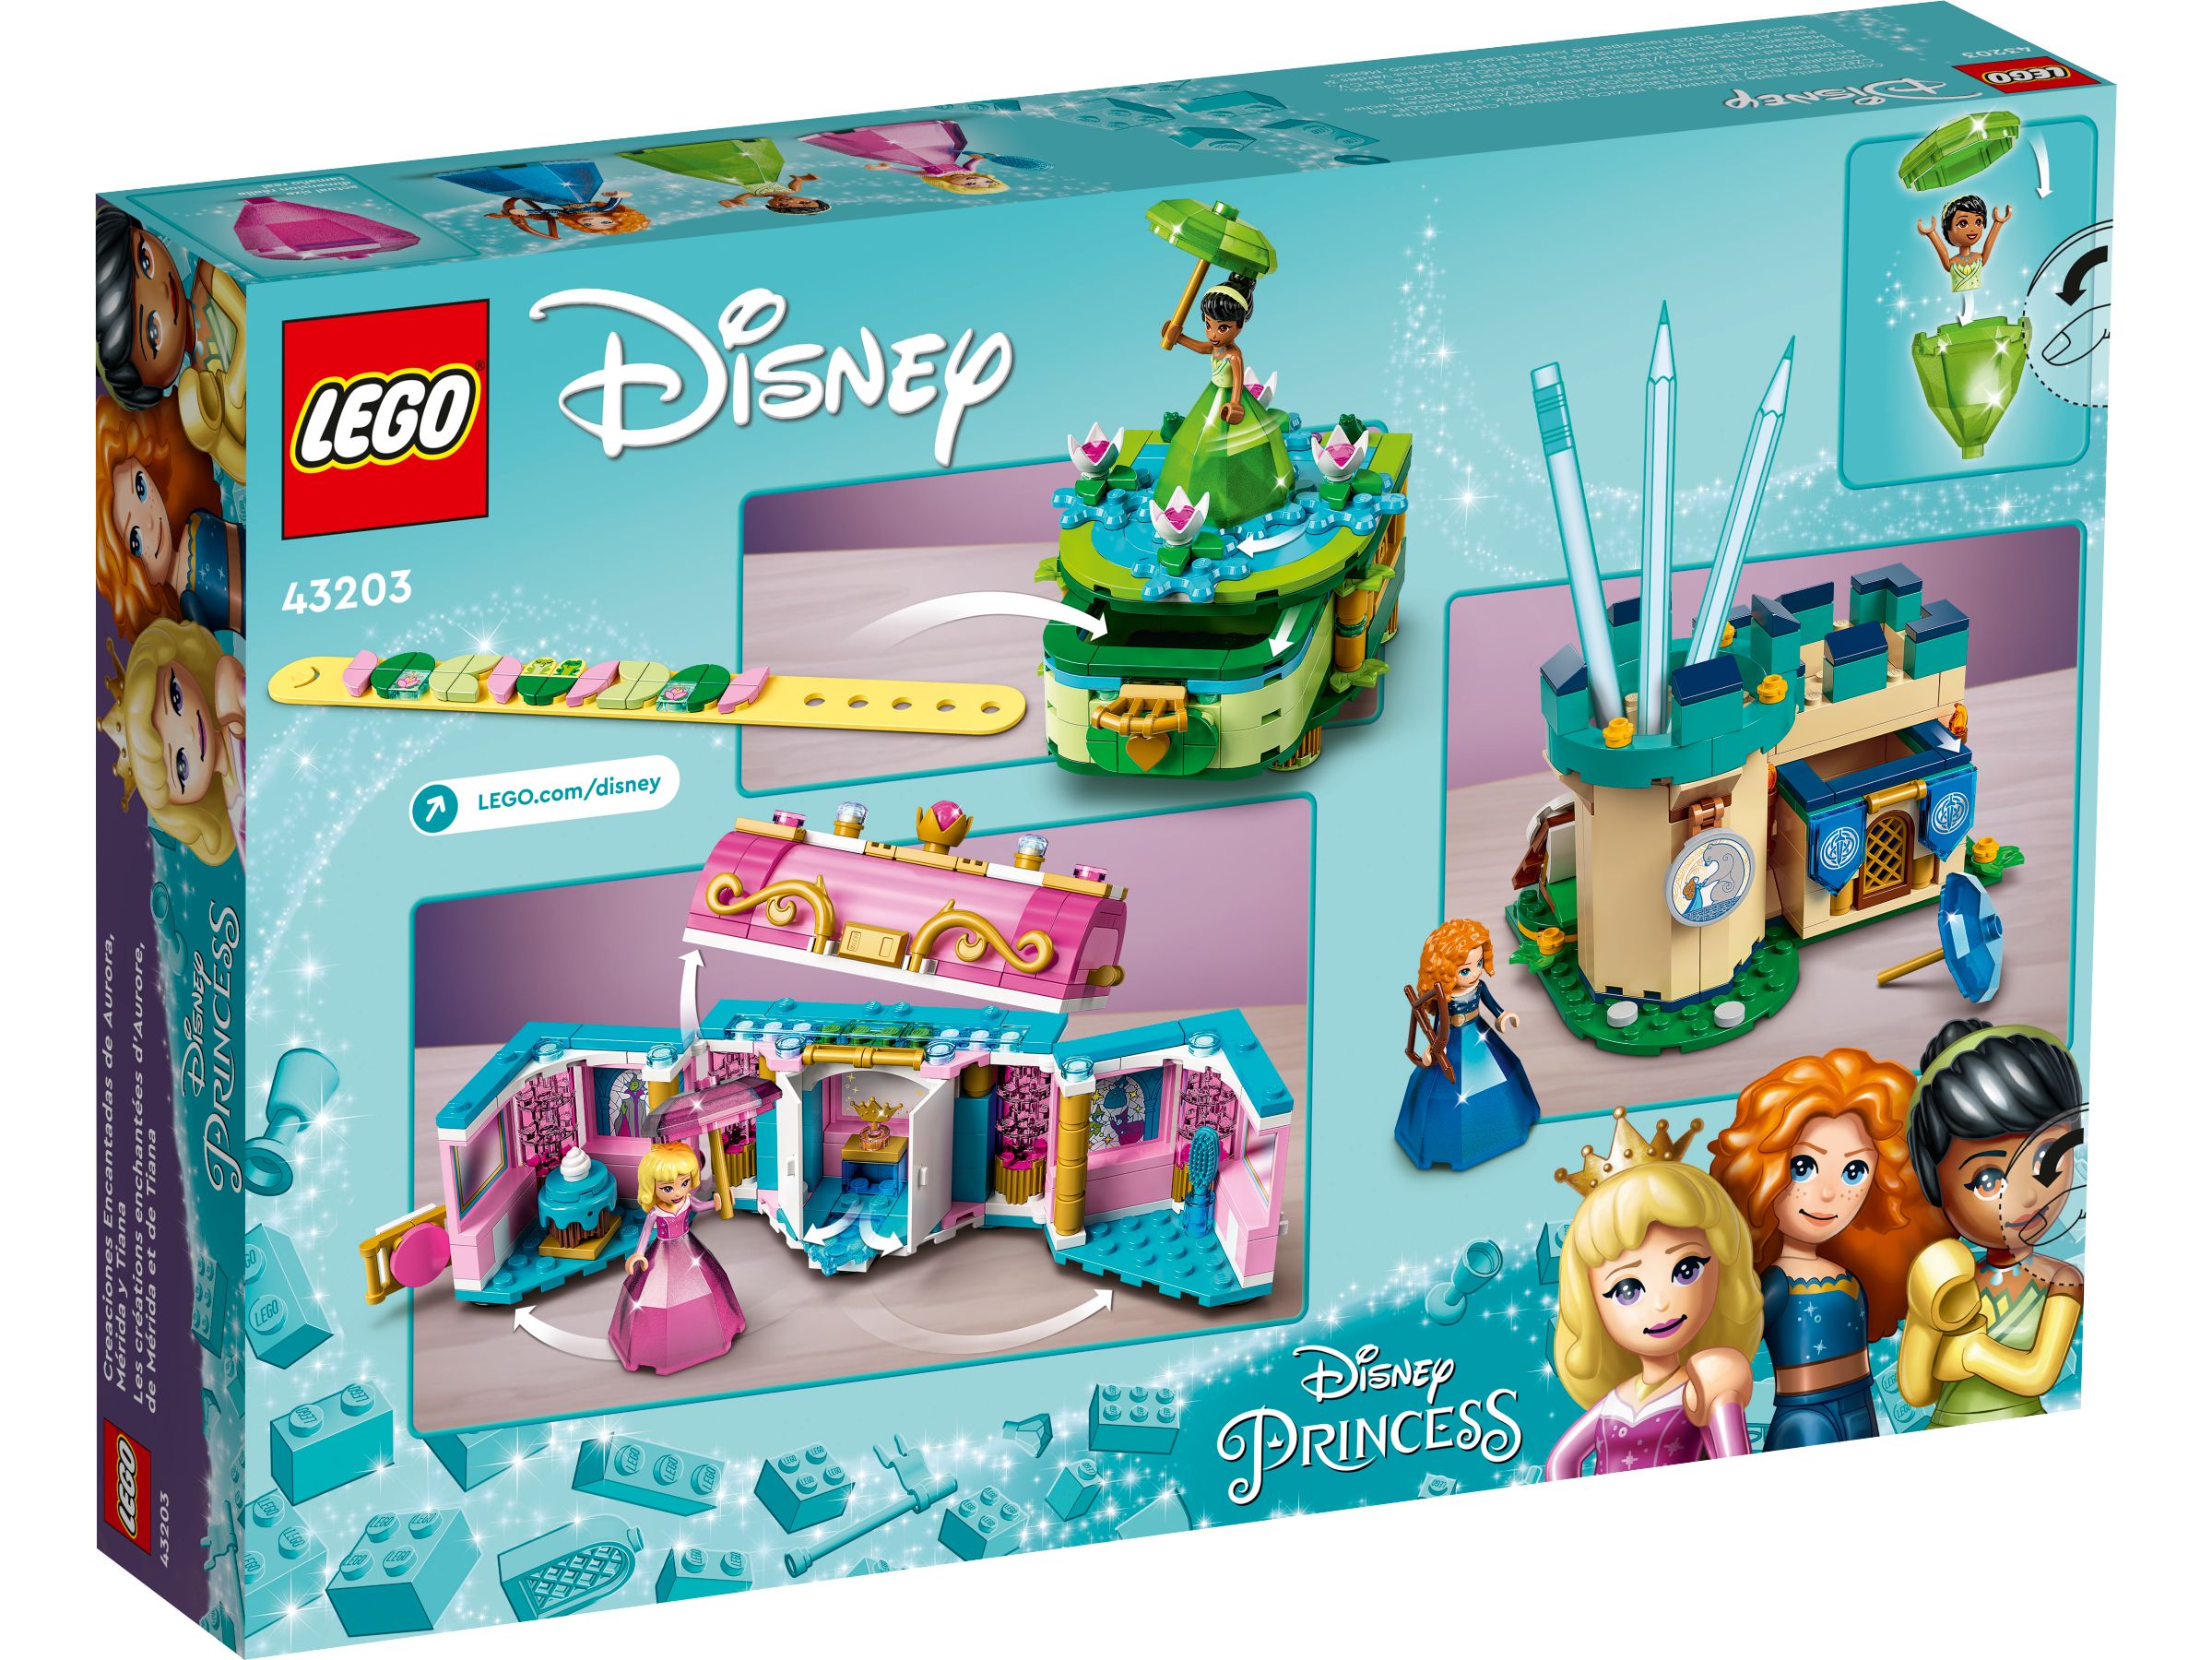 LEGO Disney 43203 Auroras, Meridas und Tianas Zauberwerke LEGO_43203_alt7.jpg